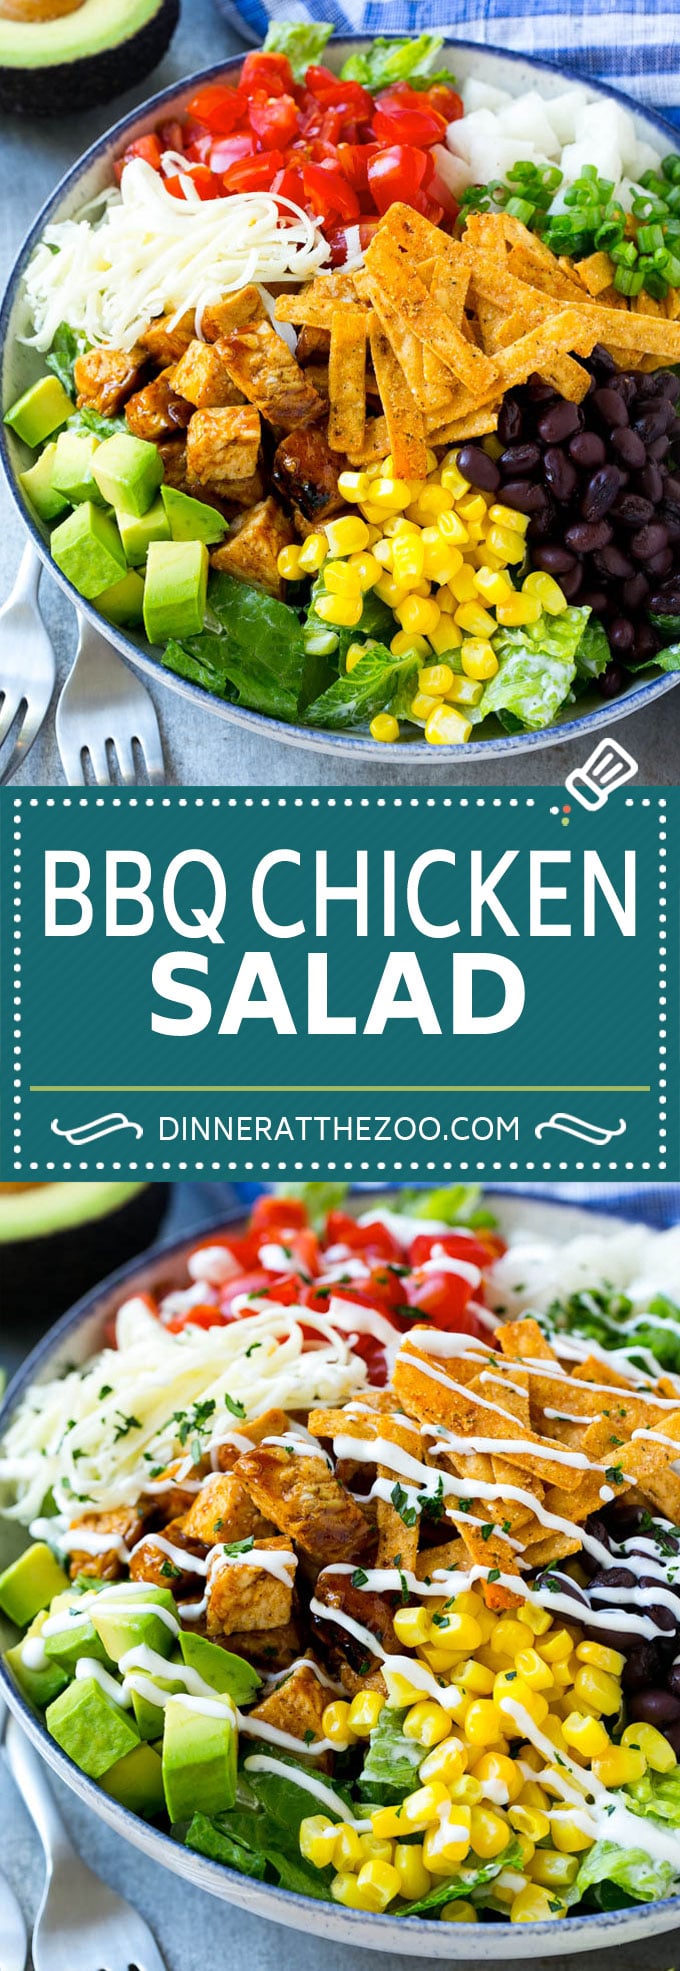 BBQ Chicken Salad Recipe | Chopped BBQ Chicken Salad | CPK Copycat Recipe #salad #chicken #bbq #chickensalad #dinneratthezoo #lunch #dinner